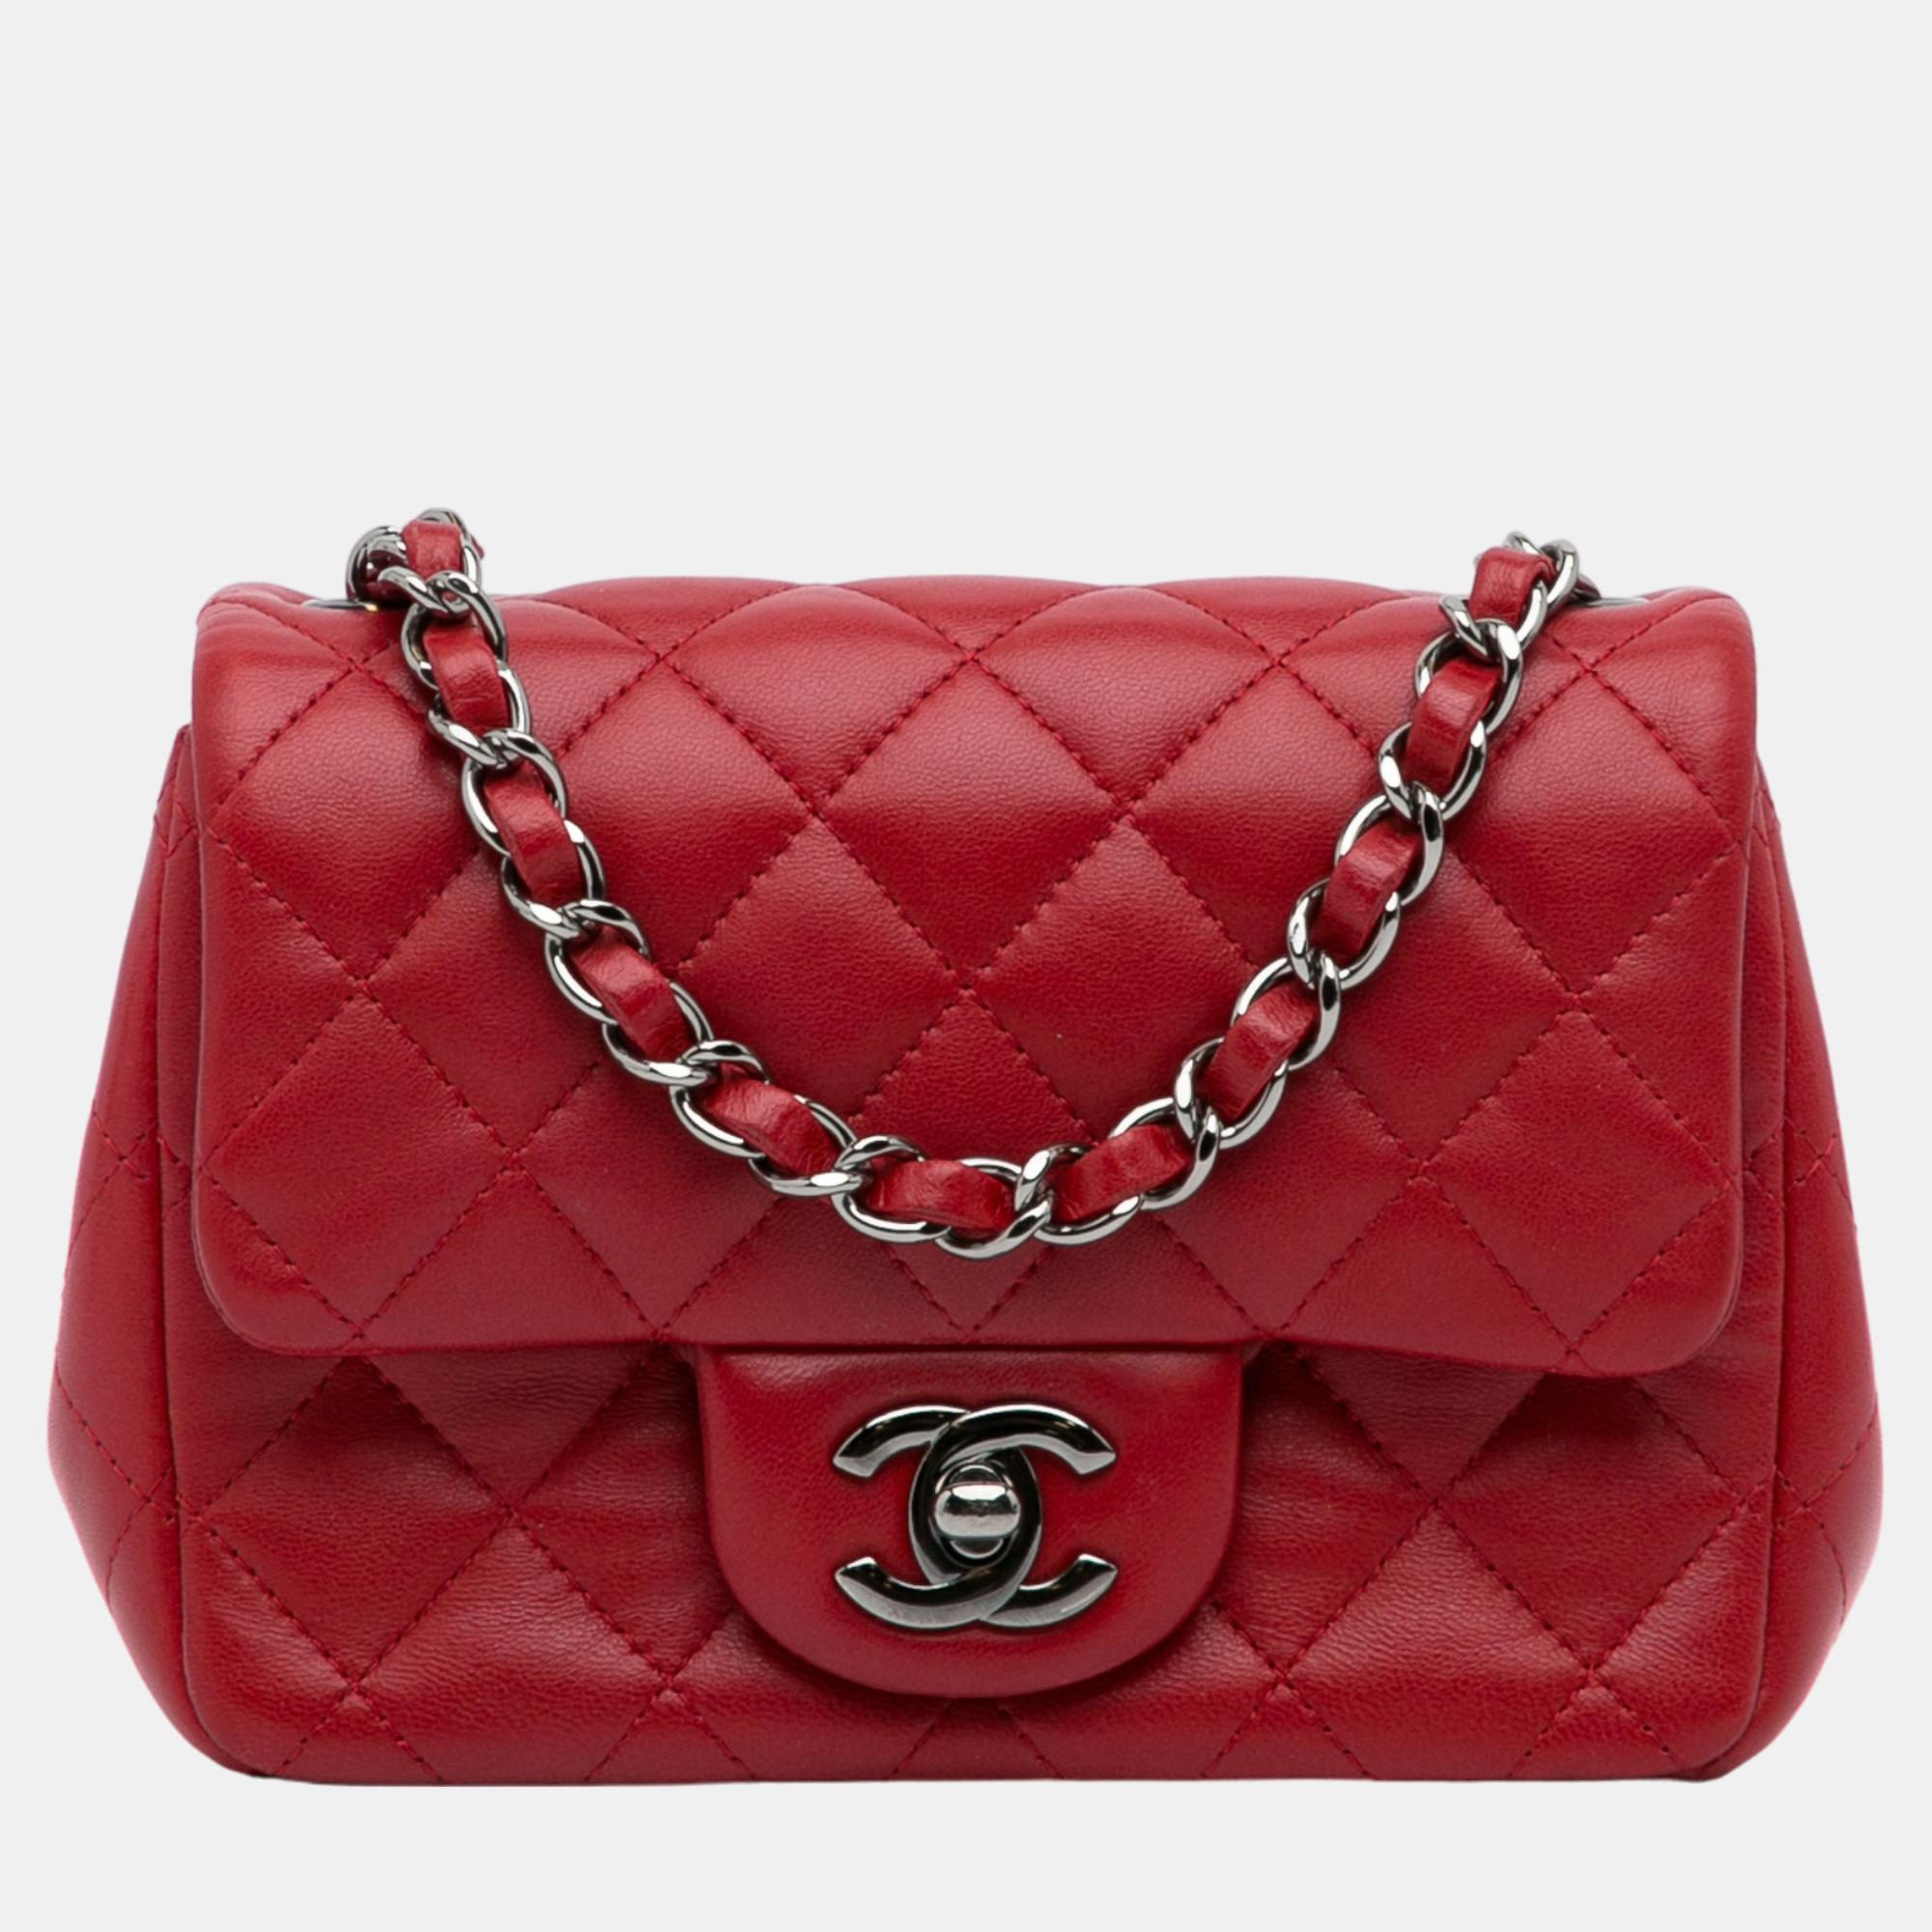 Chanel red mini classic lambskin square single flap